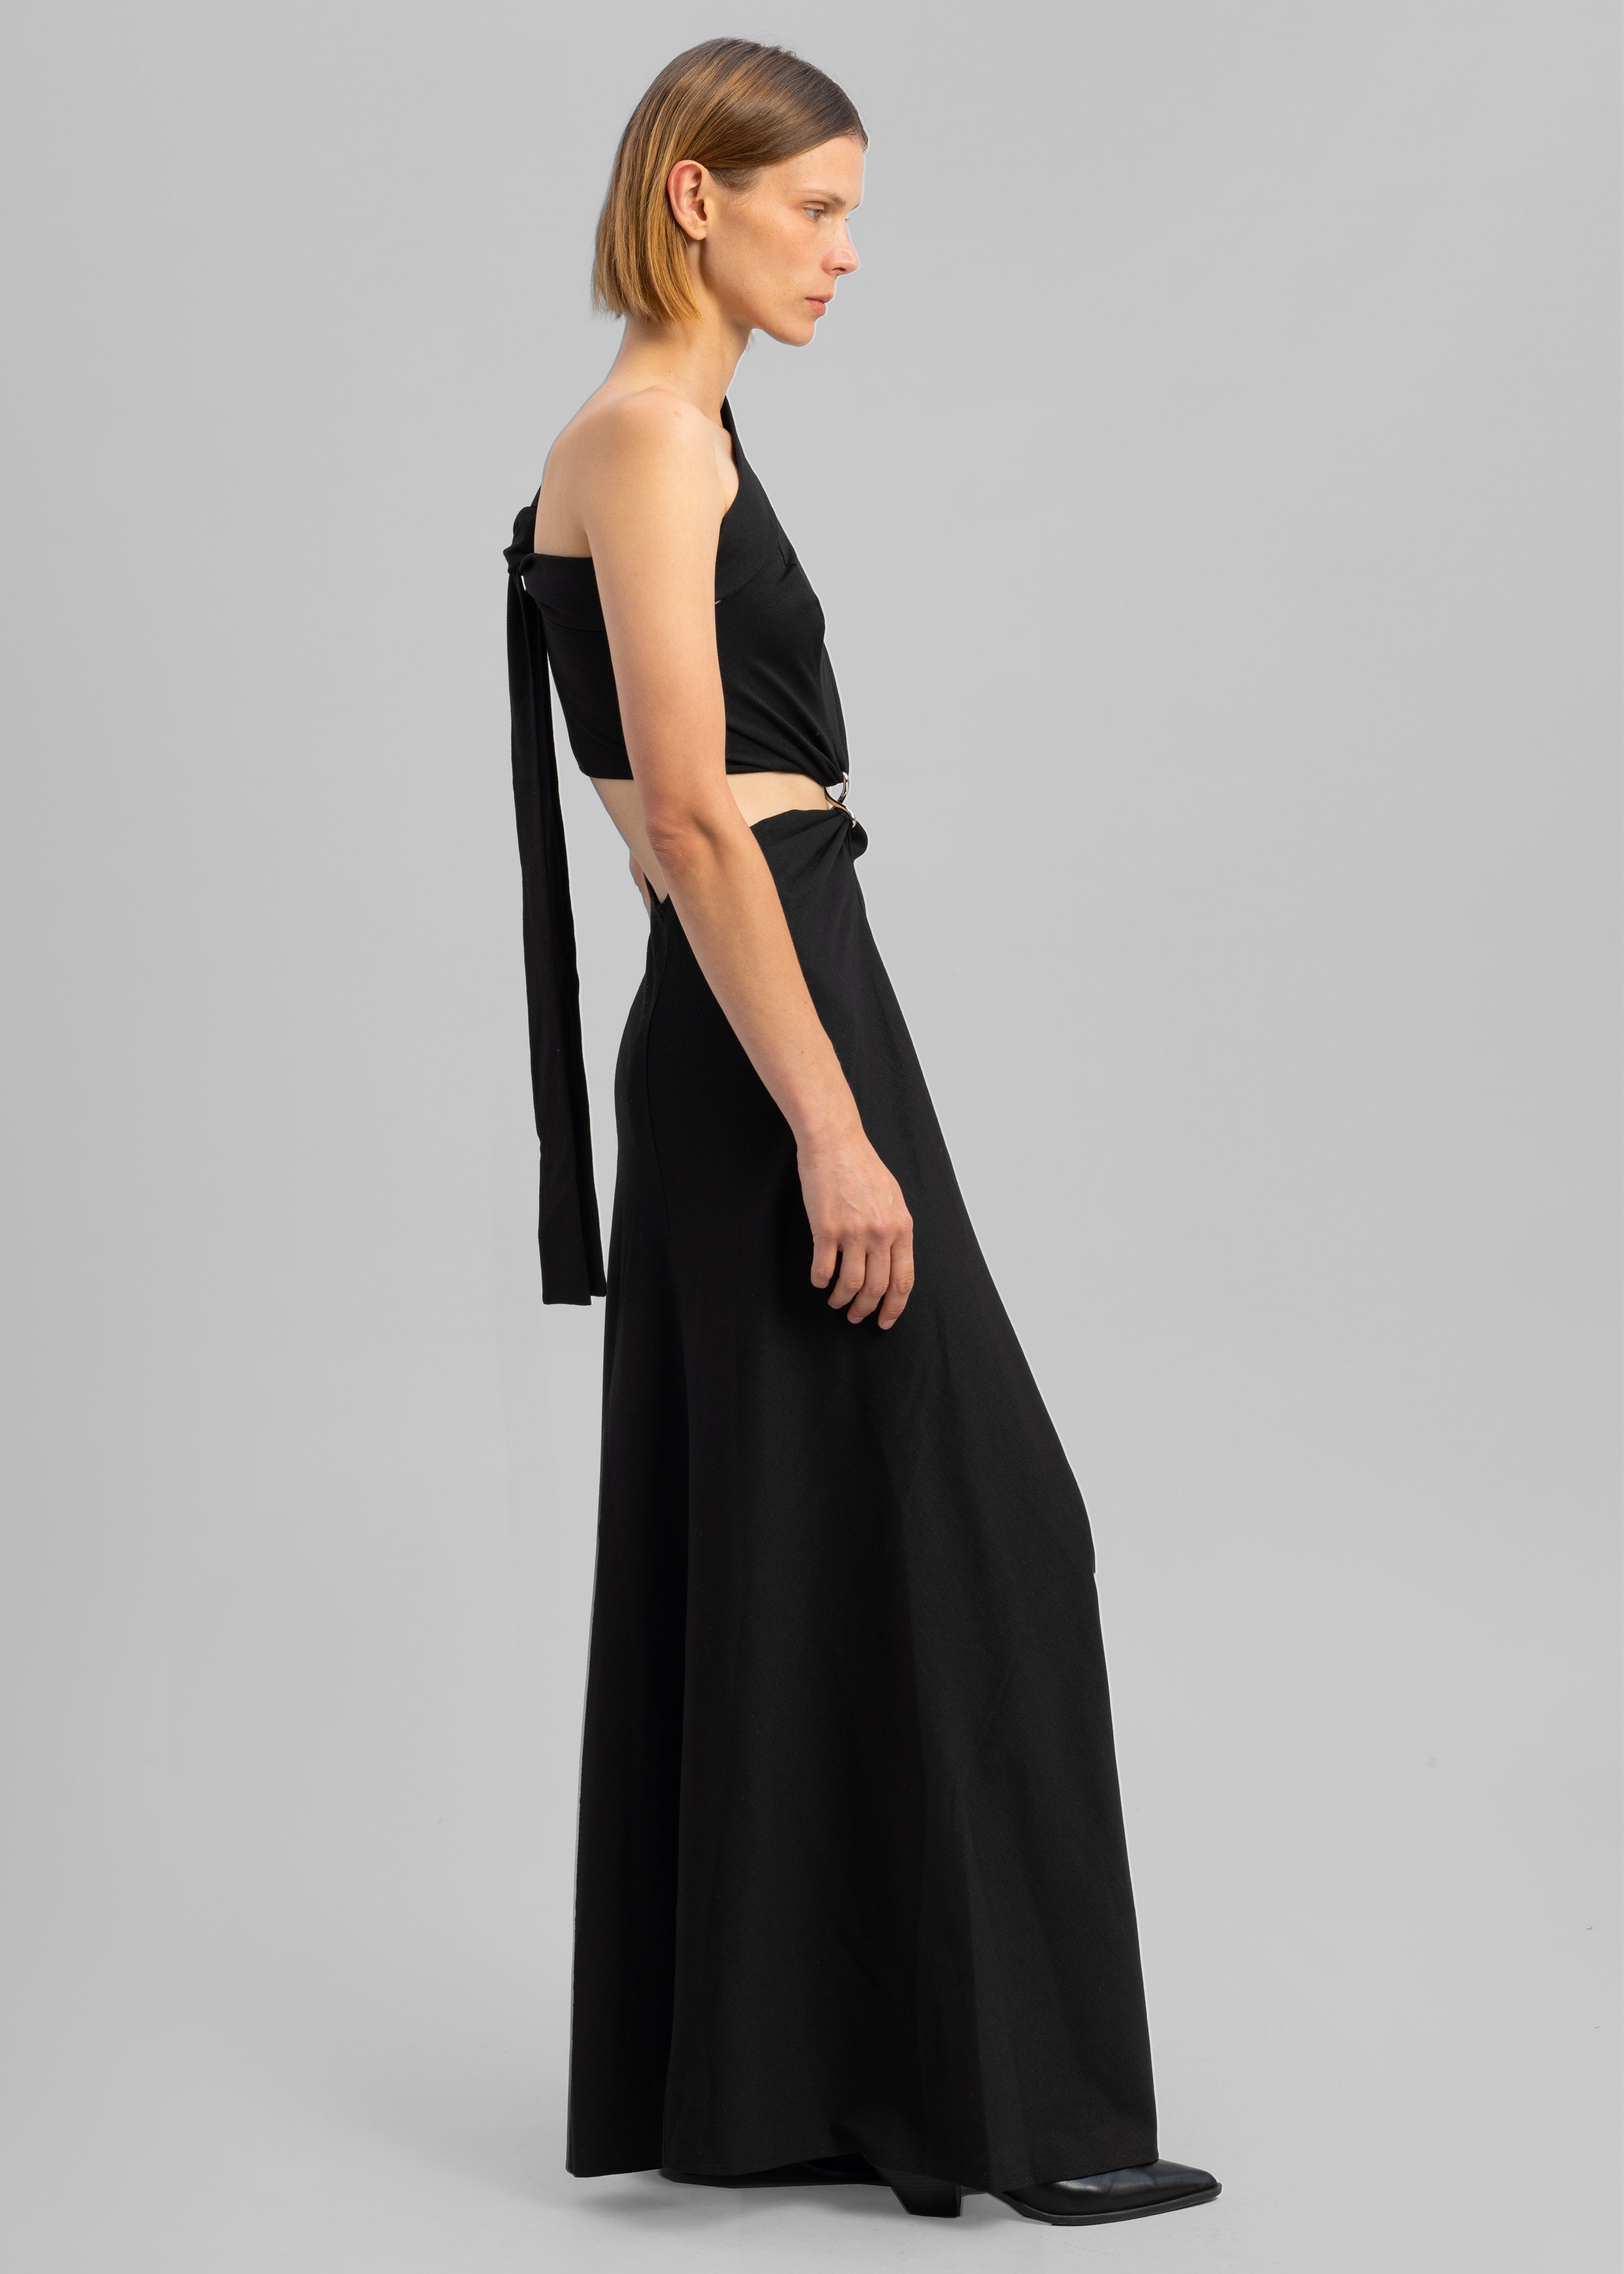 Sid Neigum Knit One-Shoulder Strap Dress W Hardware Detail - Black - 8